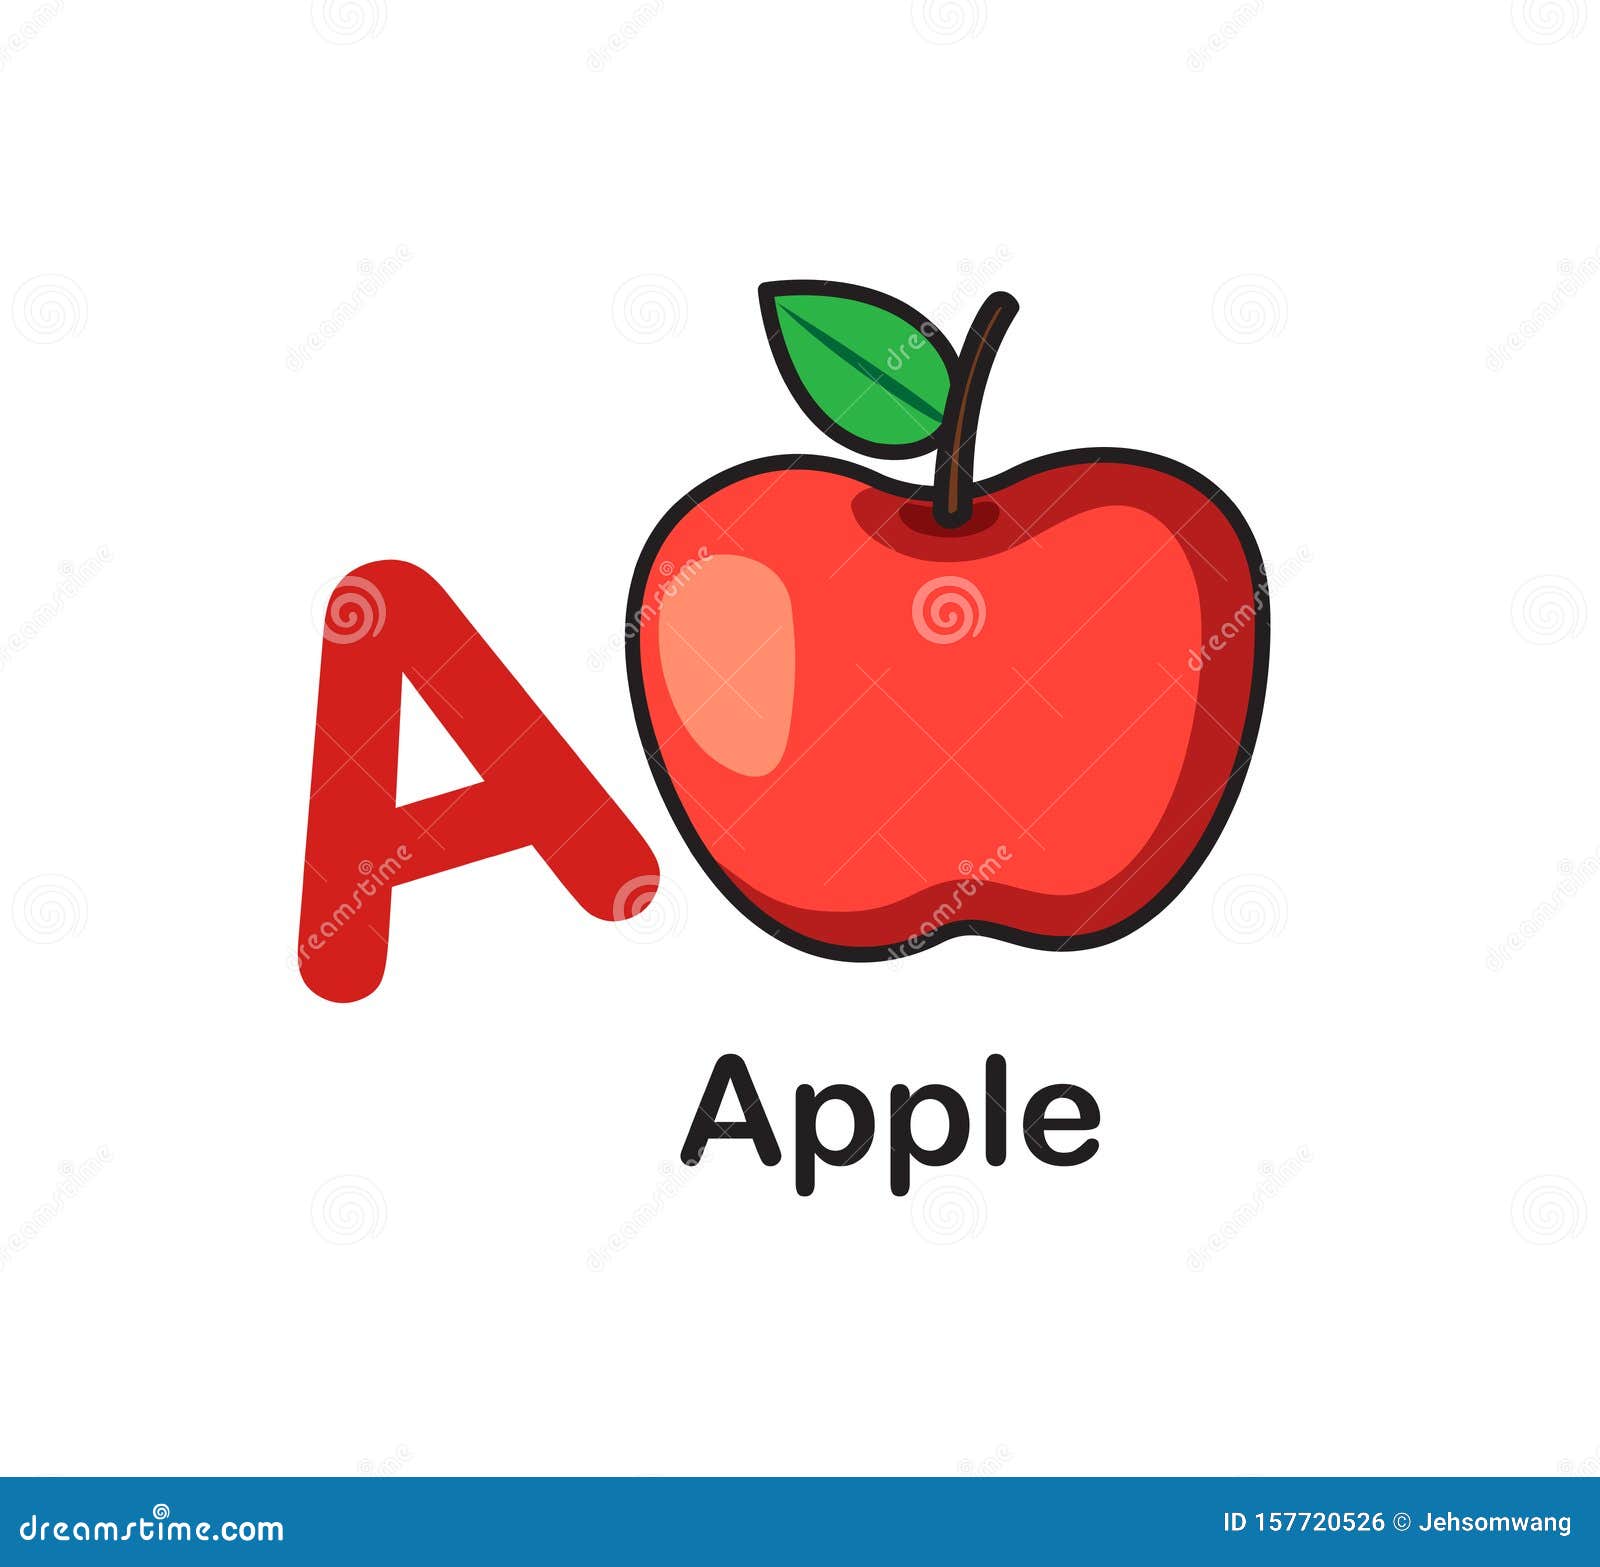 A apple or an apple smush retina display